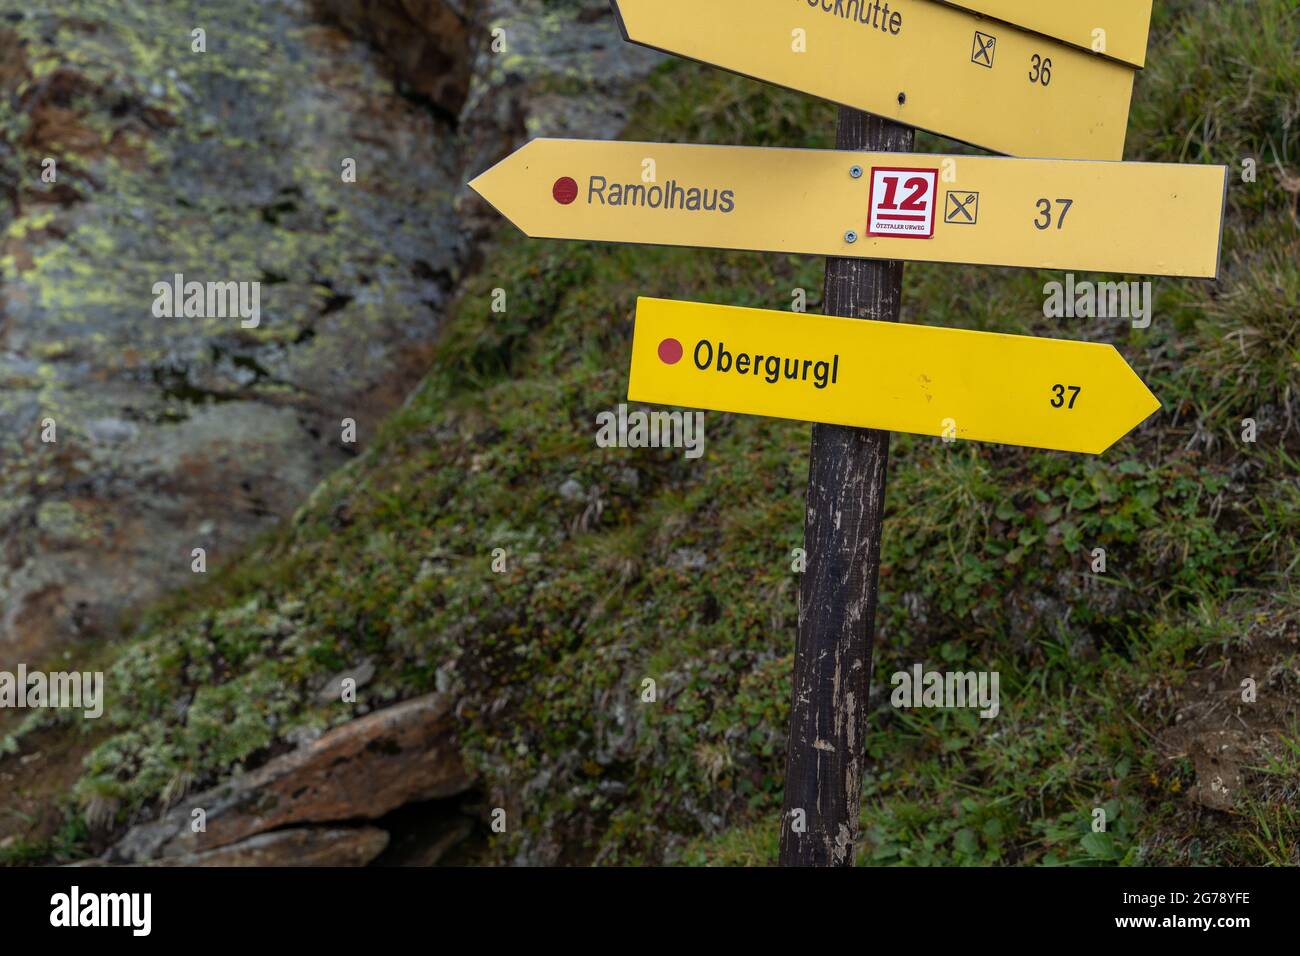 Europe, Austria, Tyrol, Ötztal Alps, Ötztal, Obergurgl, signpost at the hut entrance to the Ramolhaus Stock Photo